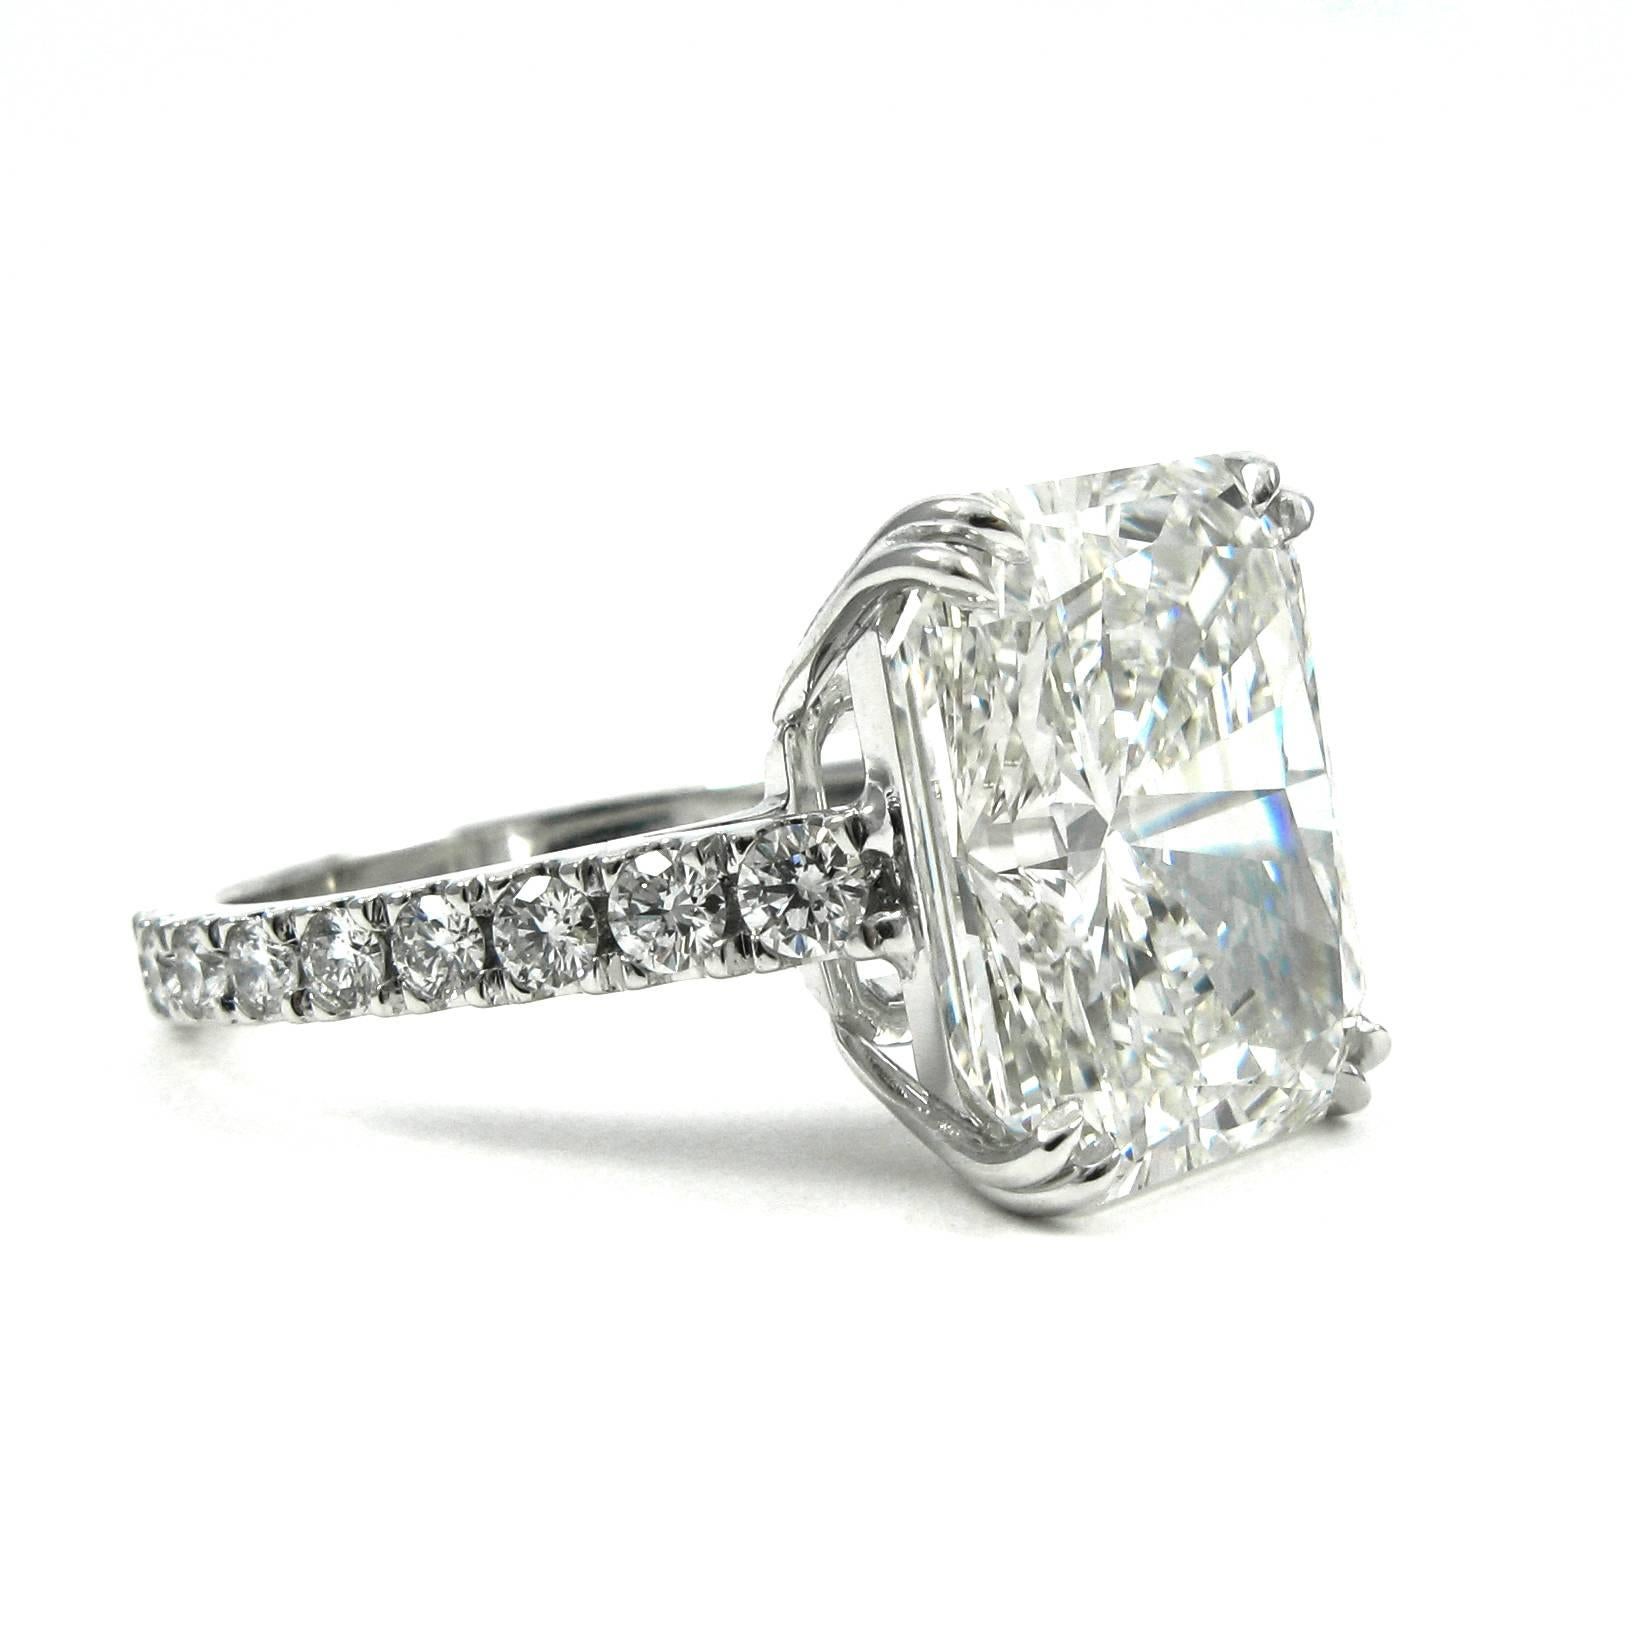 4 carat radiant cut engagement ring